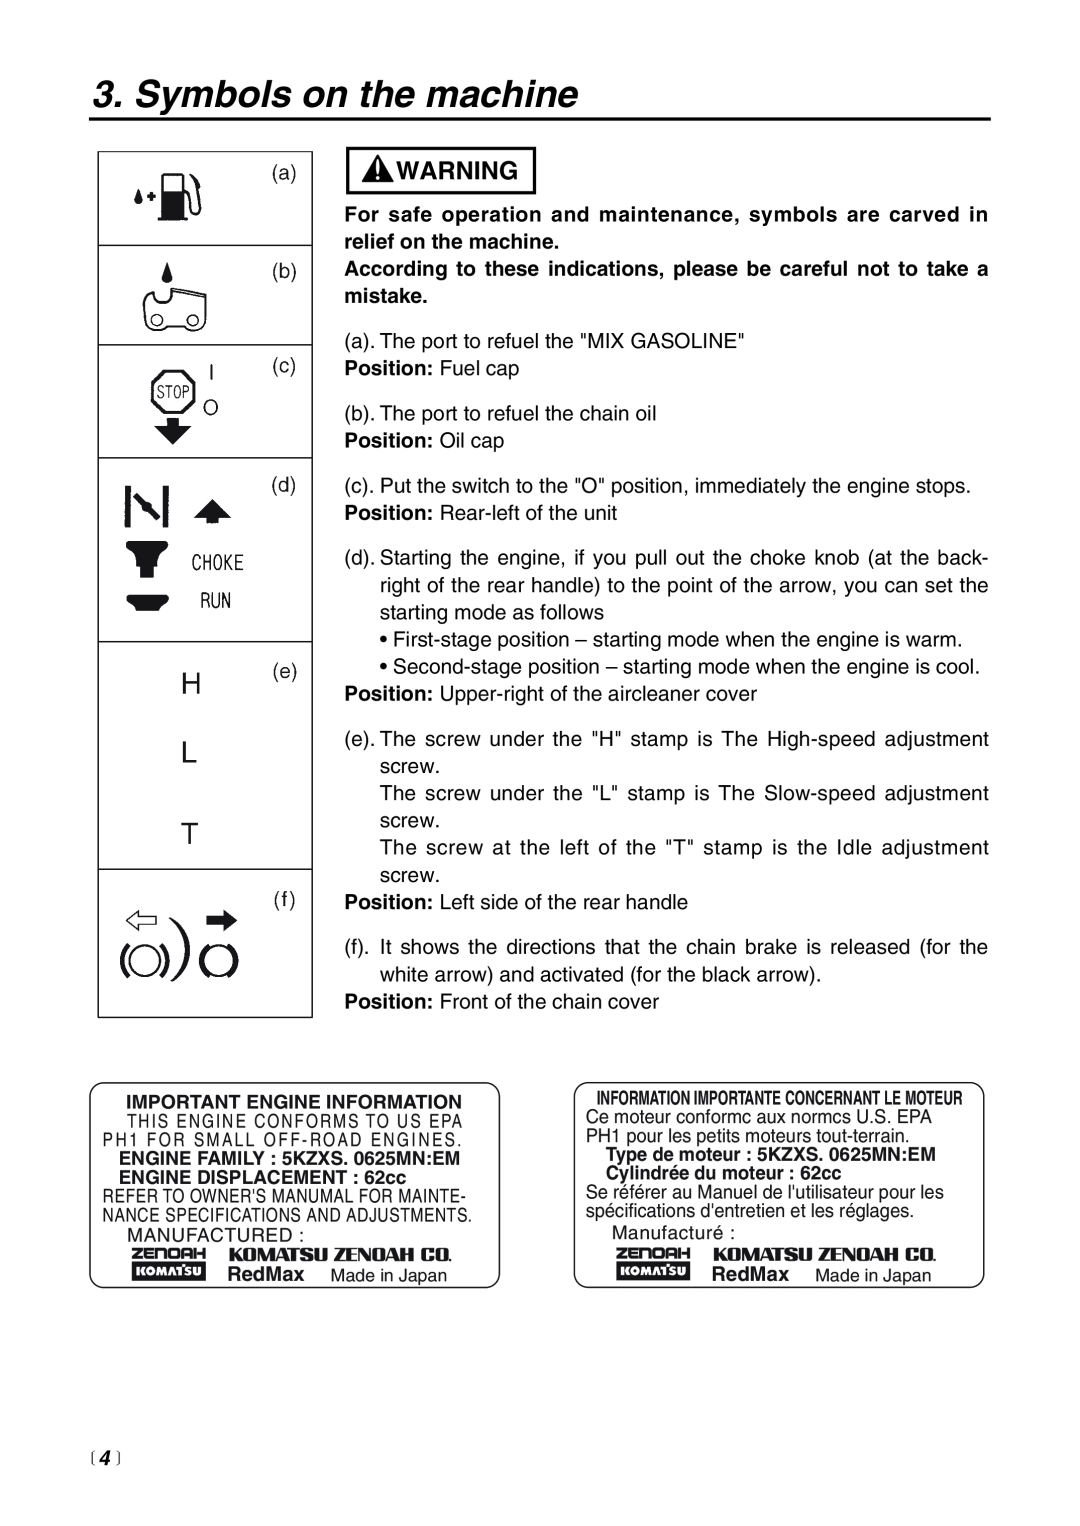 RedMax G621AVS manual Symbols on the machine,  4  